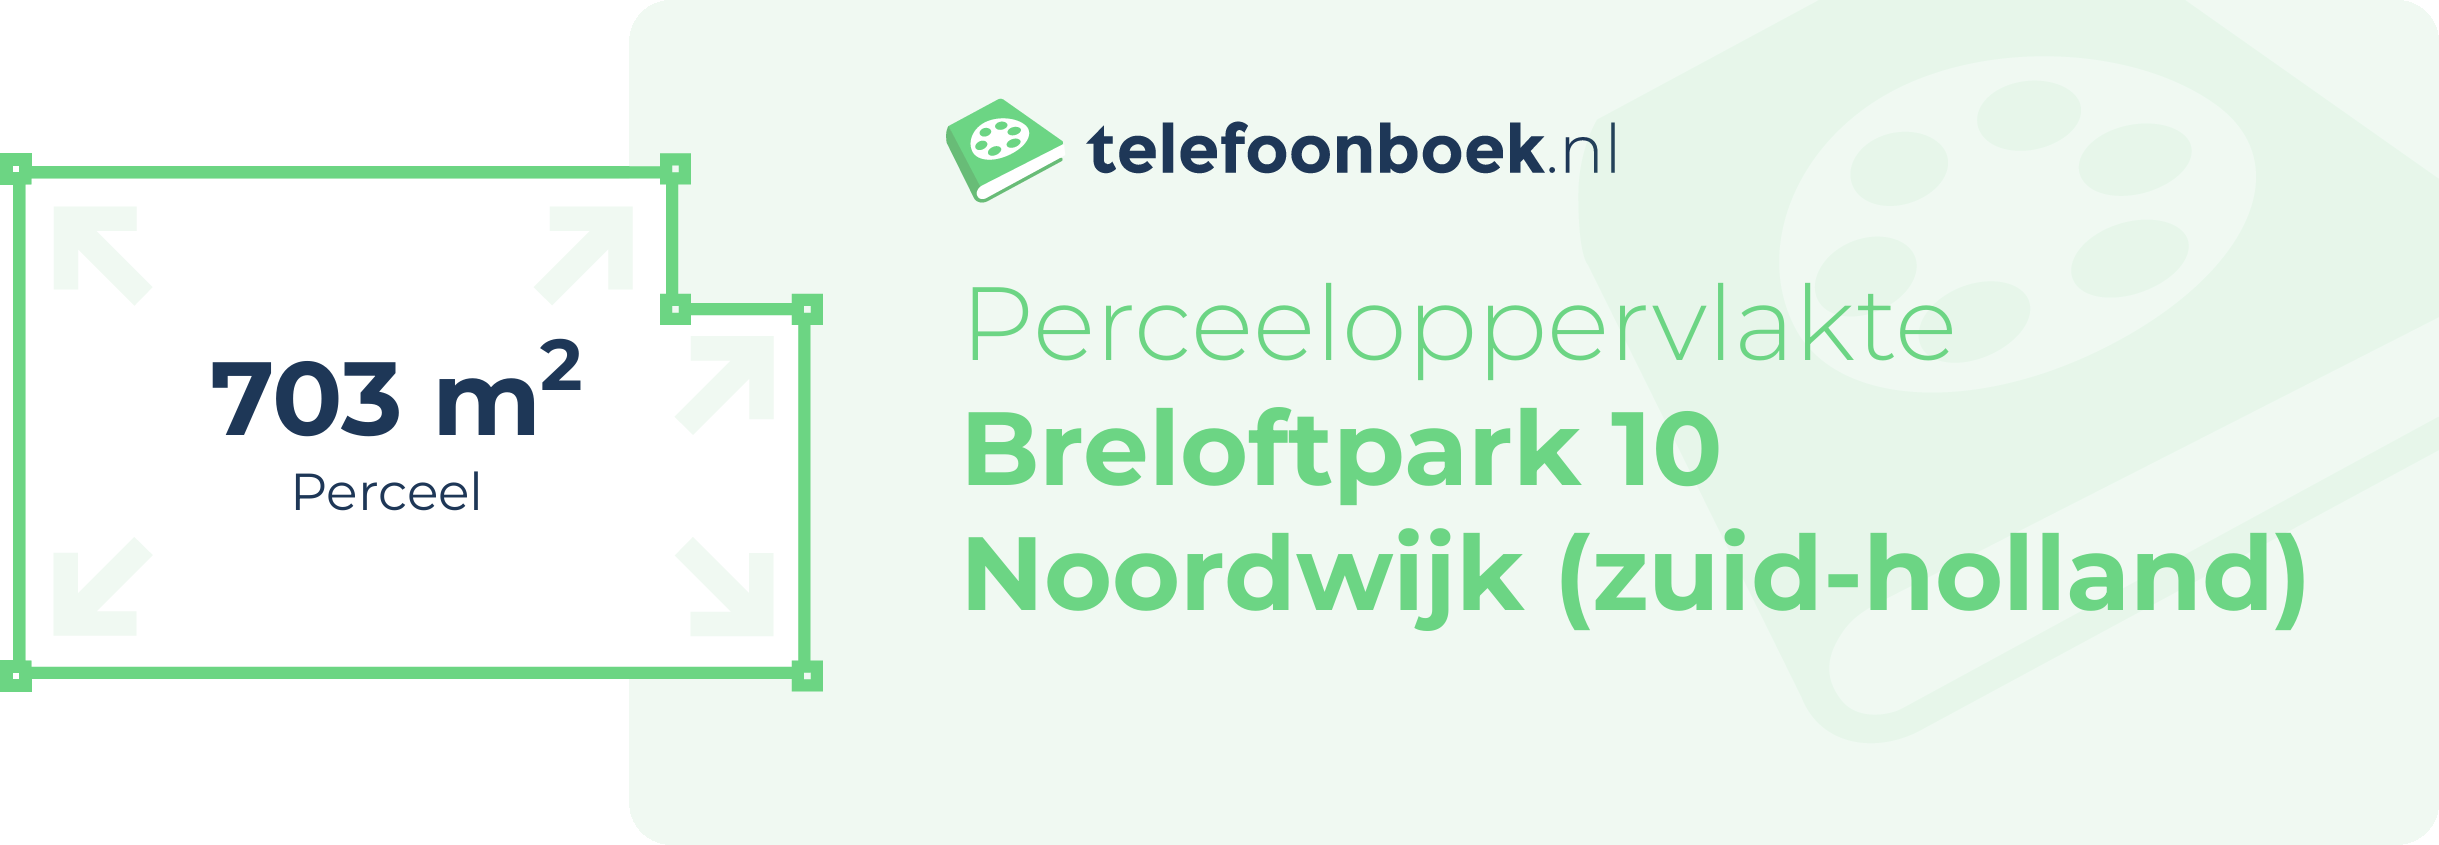 Perceeloppervlakte Breloftpark 10 Noordwijk (Zuid-Holland)